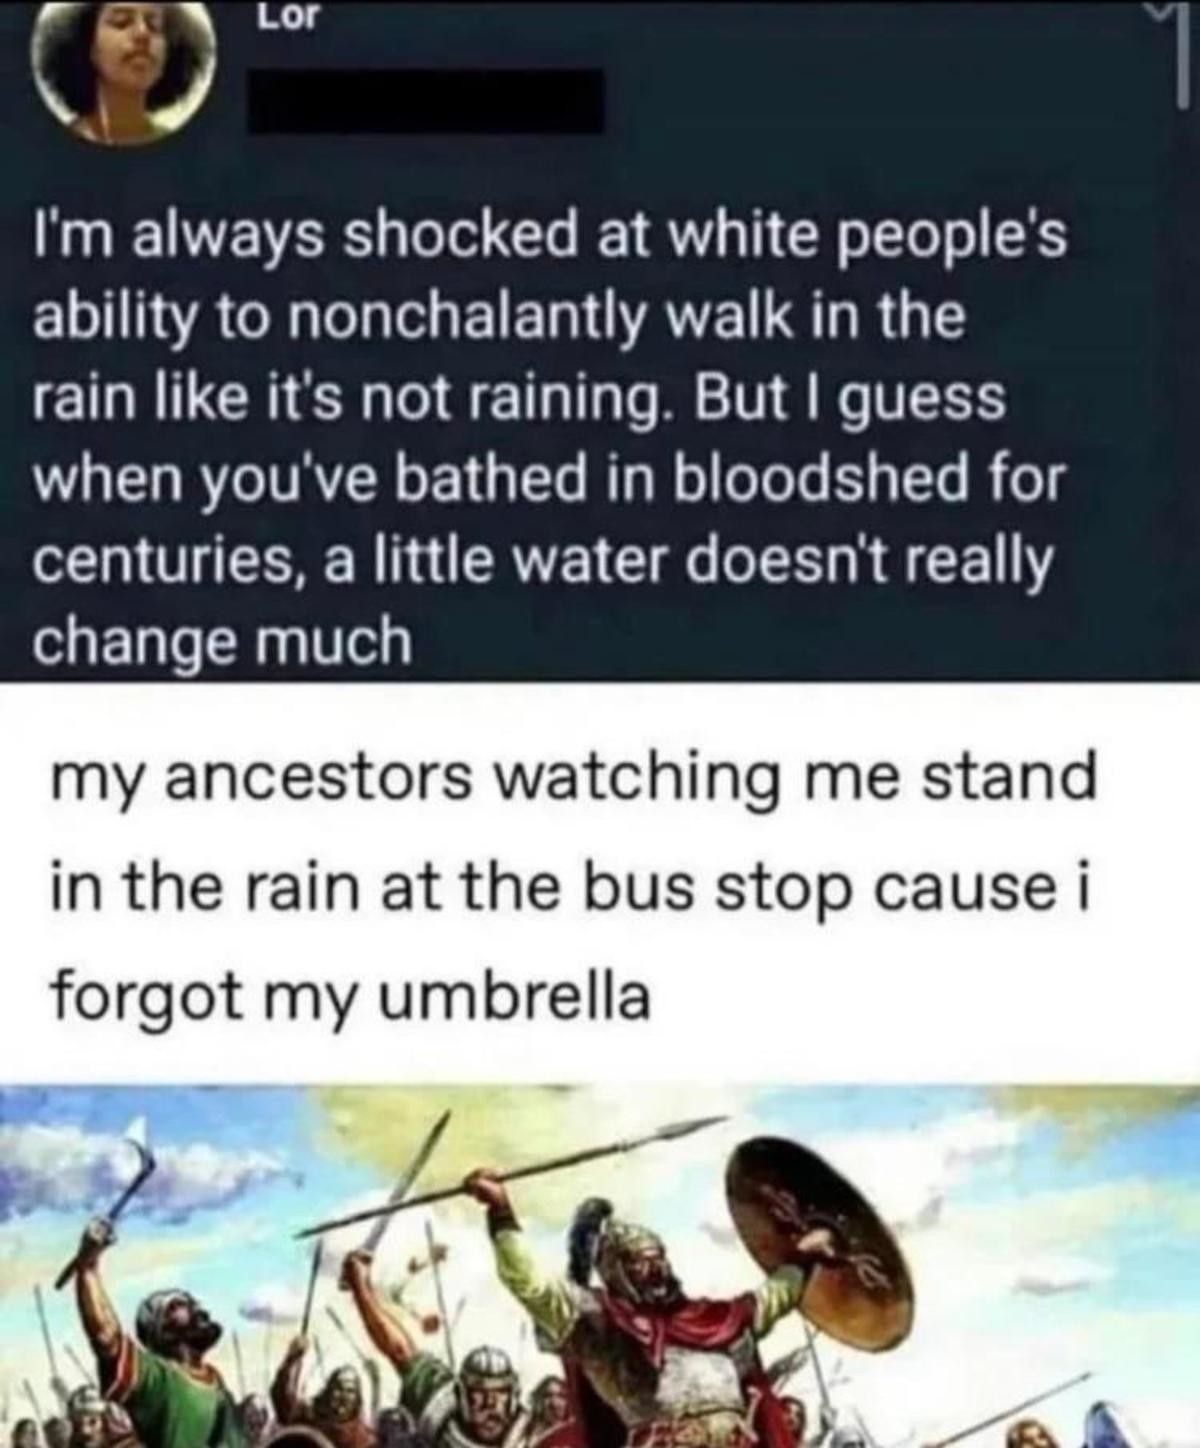 walking in the rain is a white privilege